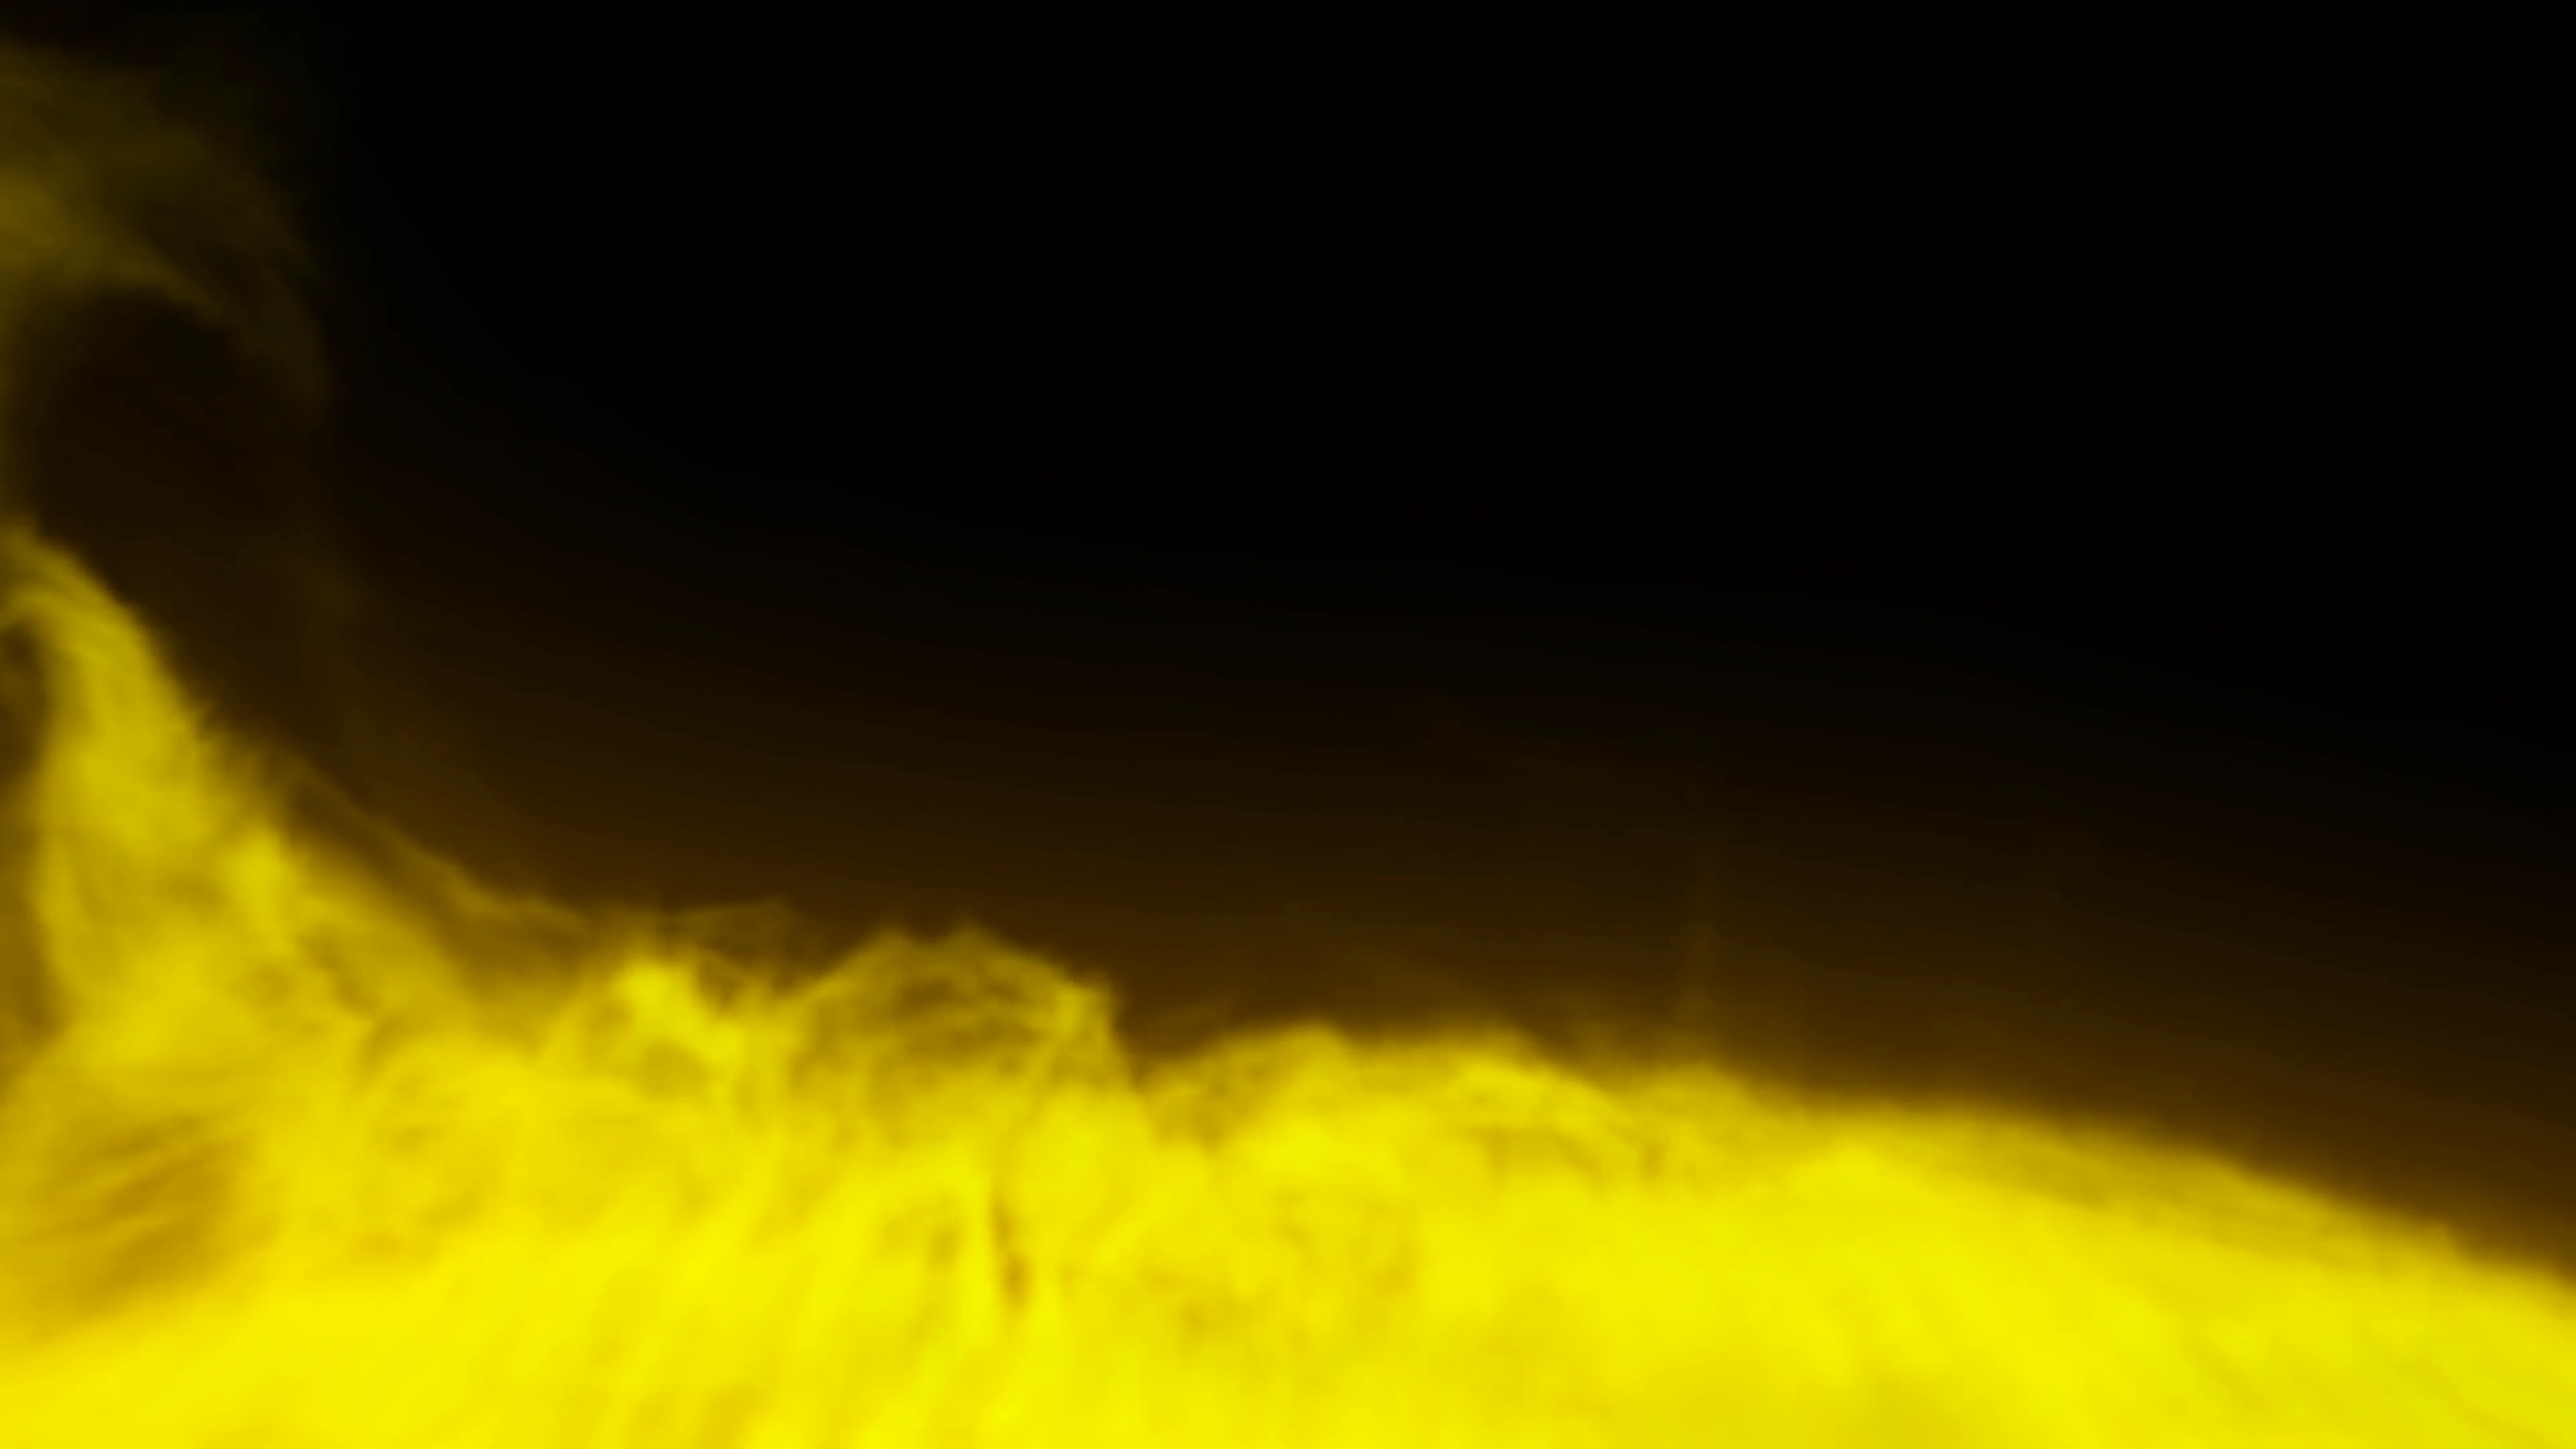 Animated glowing yellow dense smoke or gas rising against ...